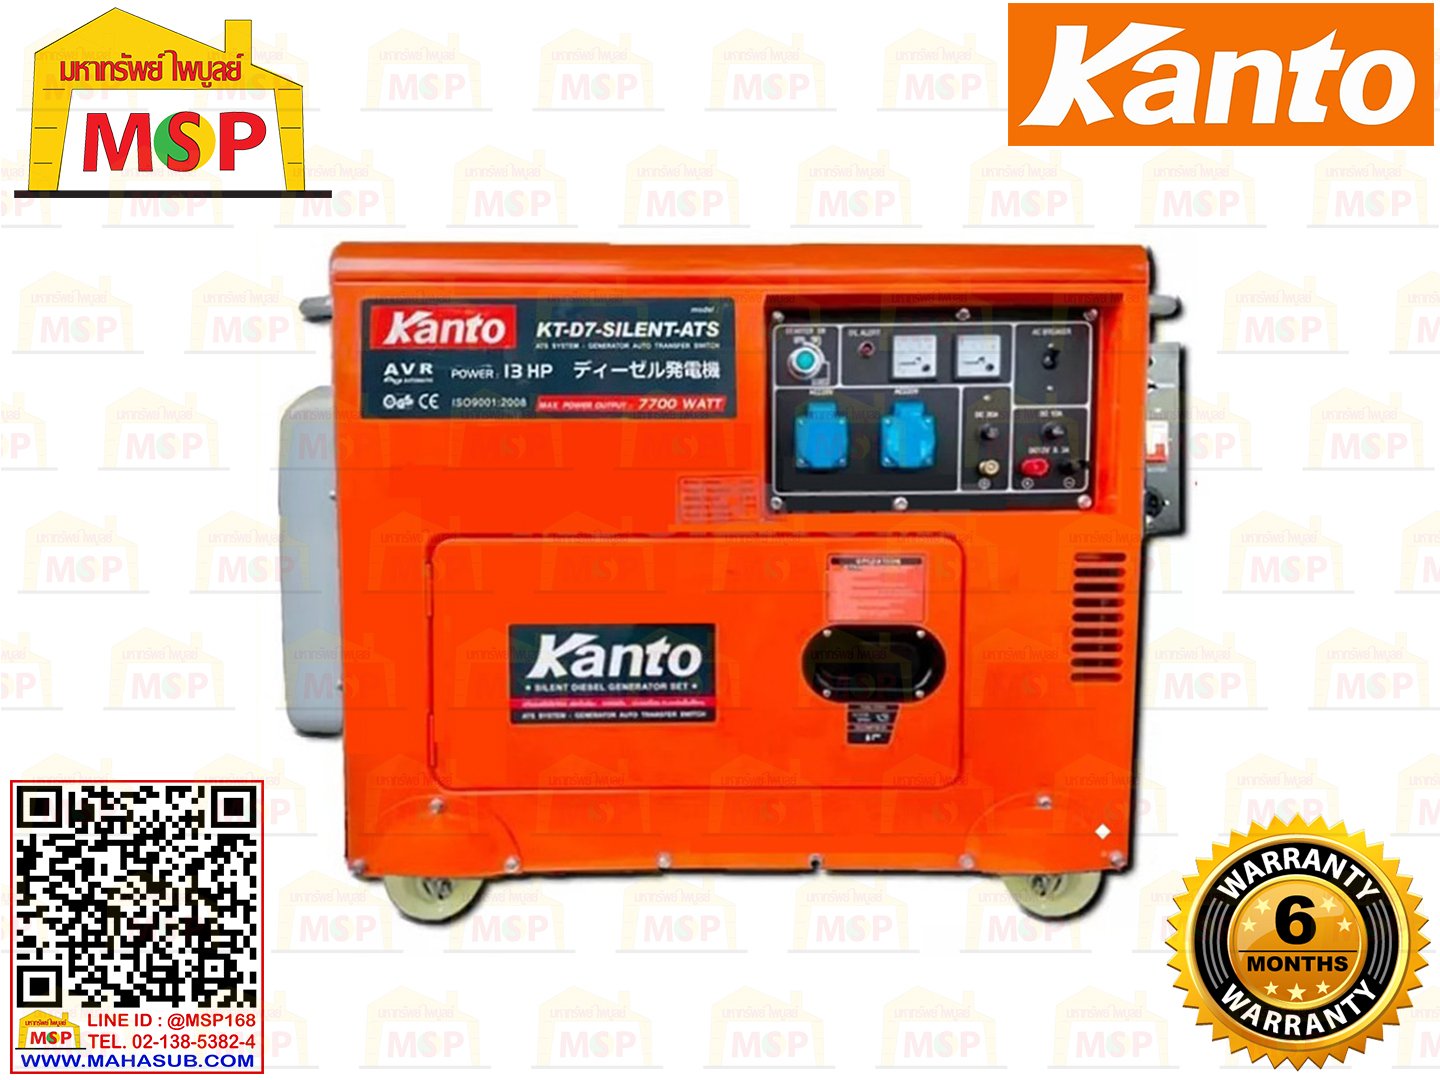 Kanto เครื่องปั่นไฟใช้ดีเซล KT-D7-SILENT-ATS 7.7 KW 220V กุญแจ #NV